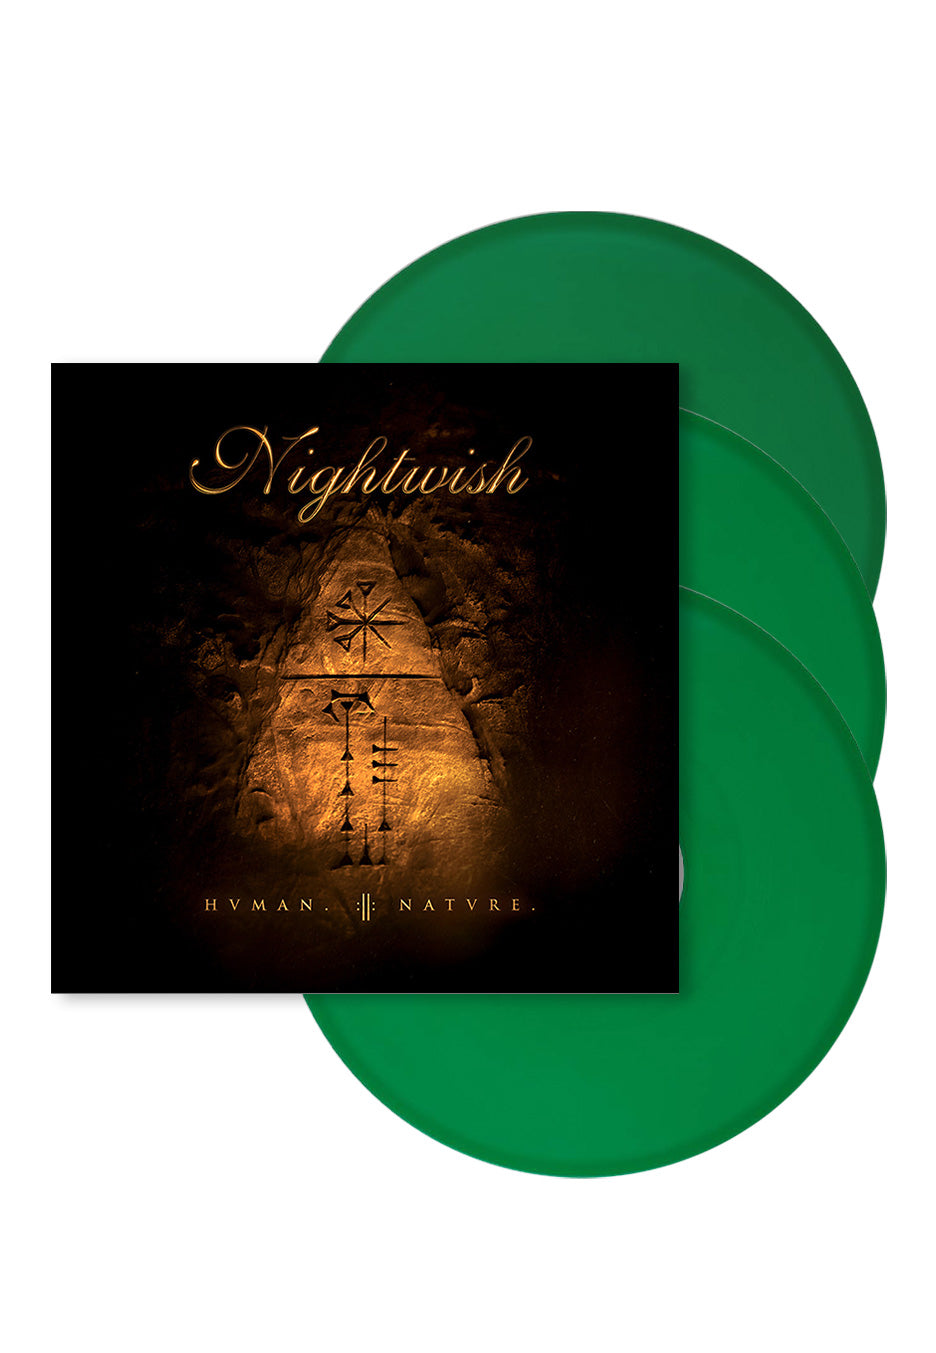 Nightwish - Human. :Ii: Nature. Ltd. Astro Green - Colored 3 Vinyl